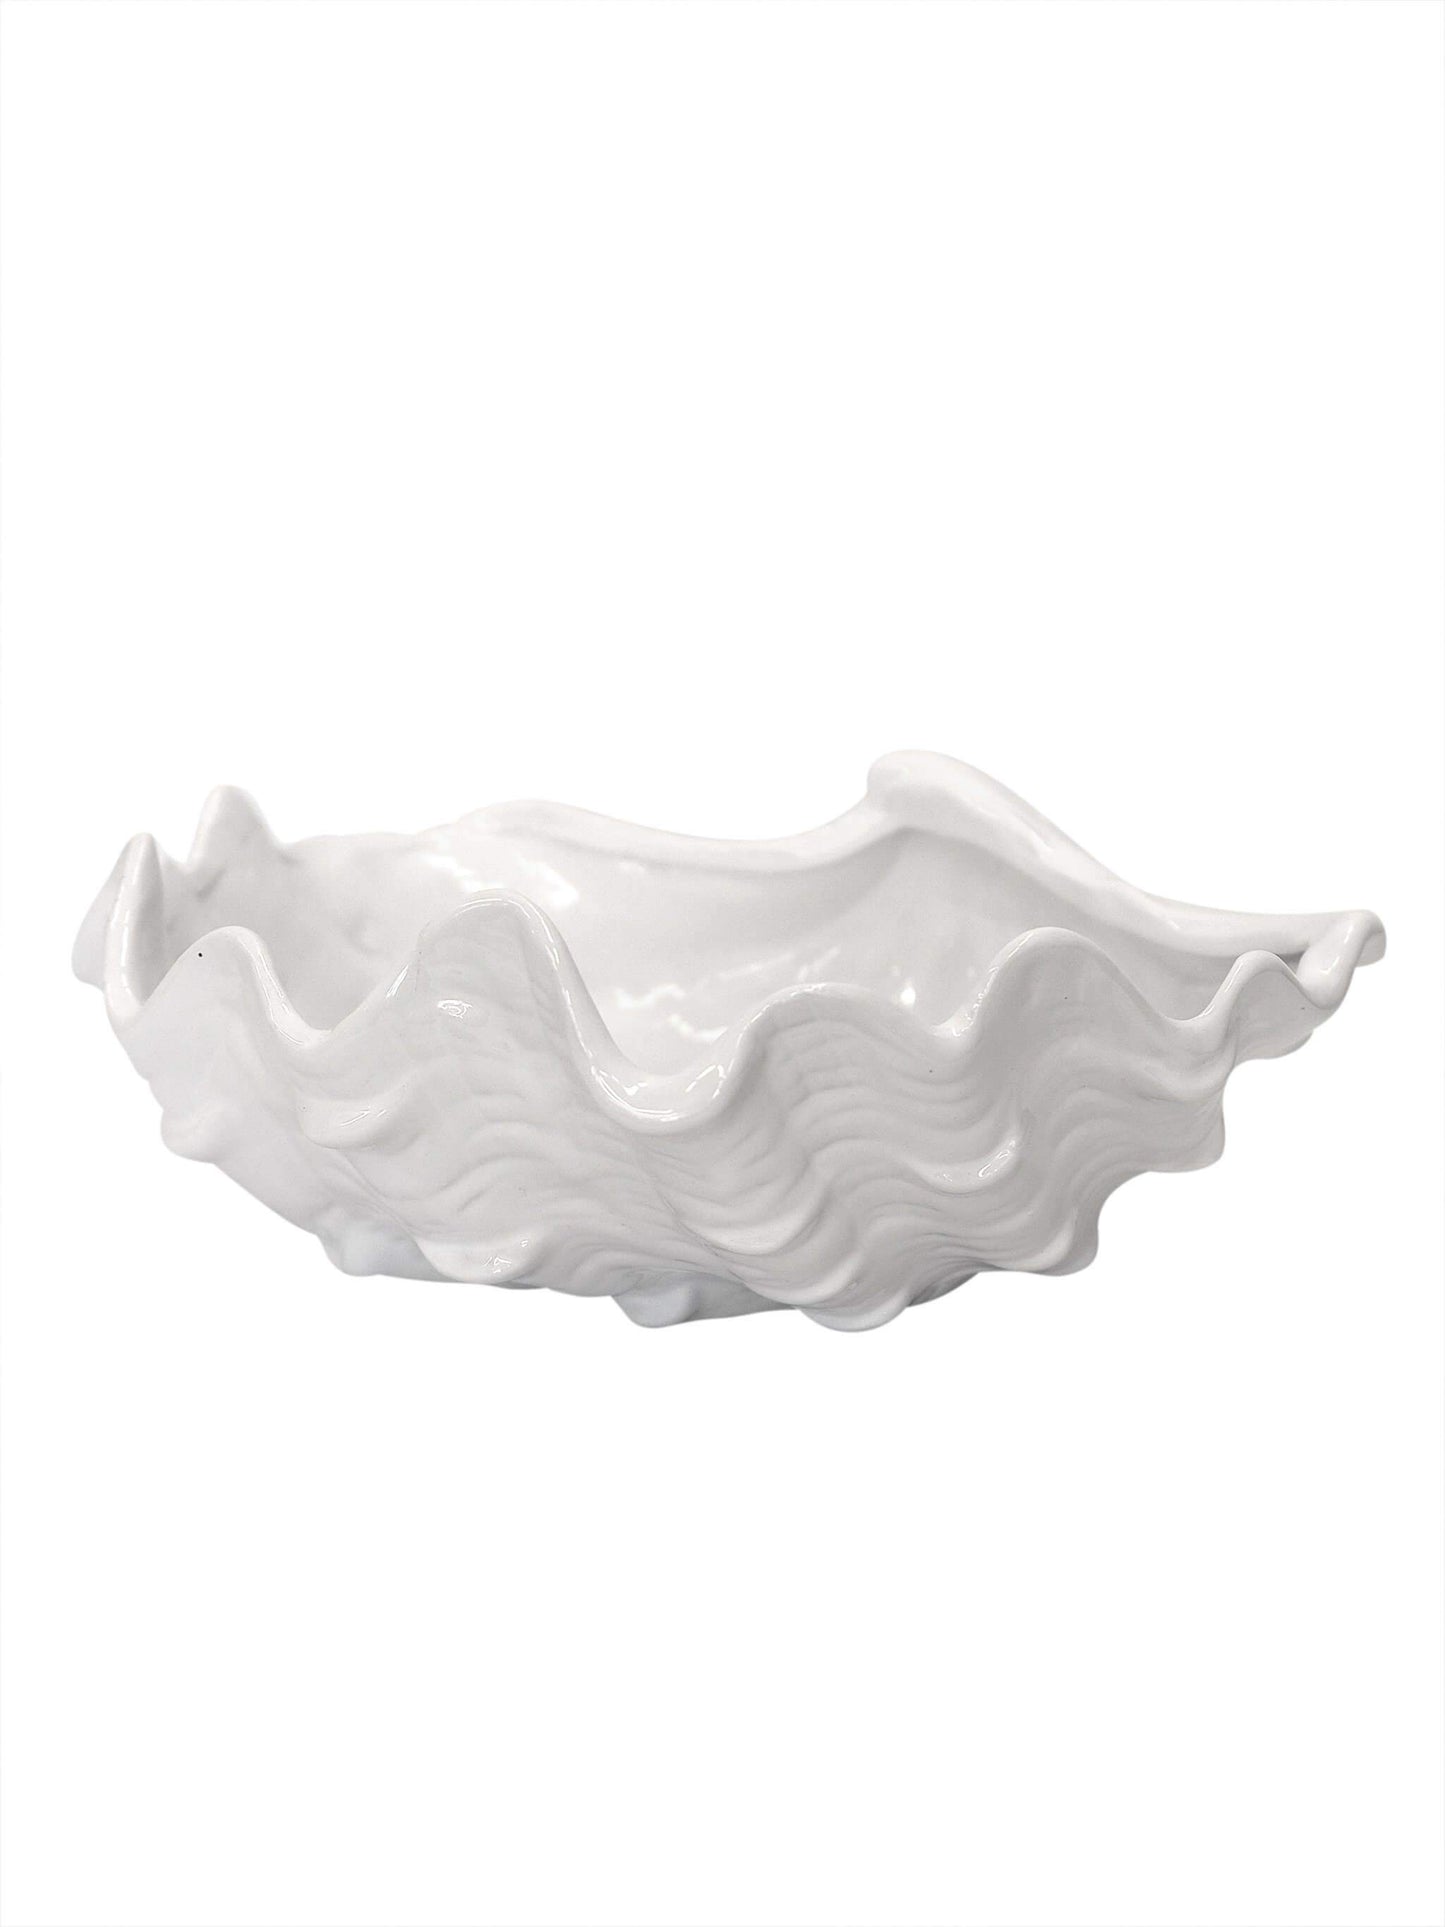 Ceramic Clam Bowl - Shop Charlies Interiors